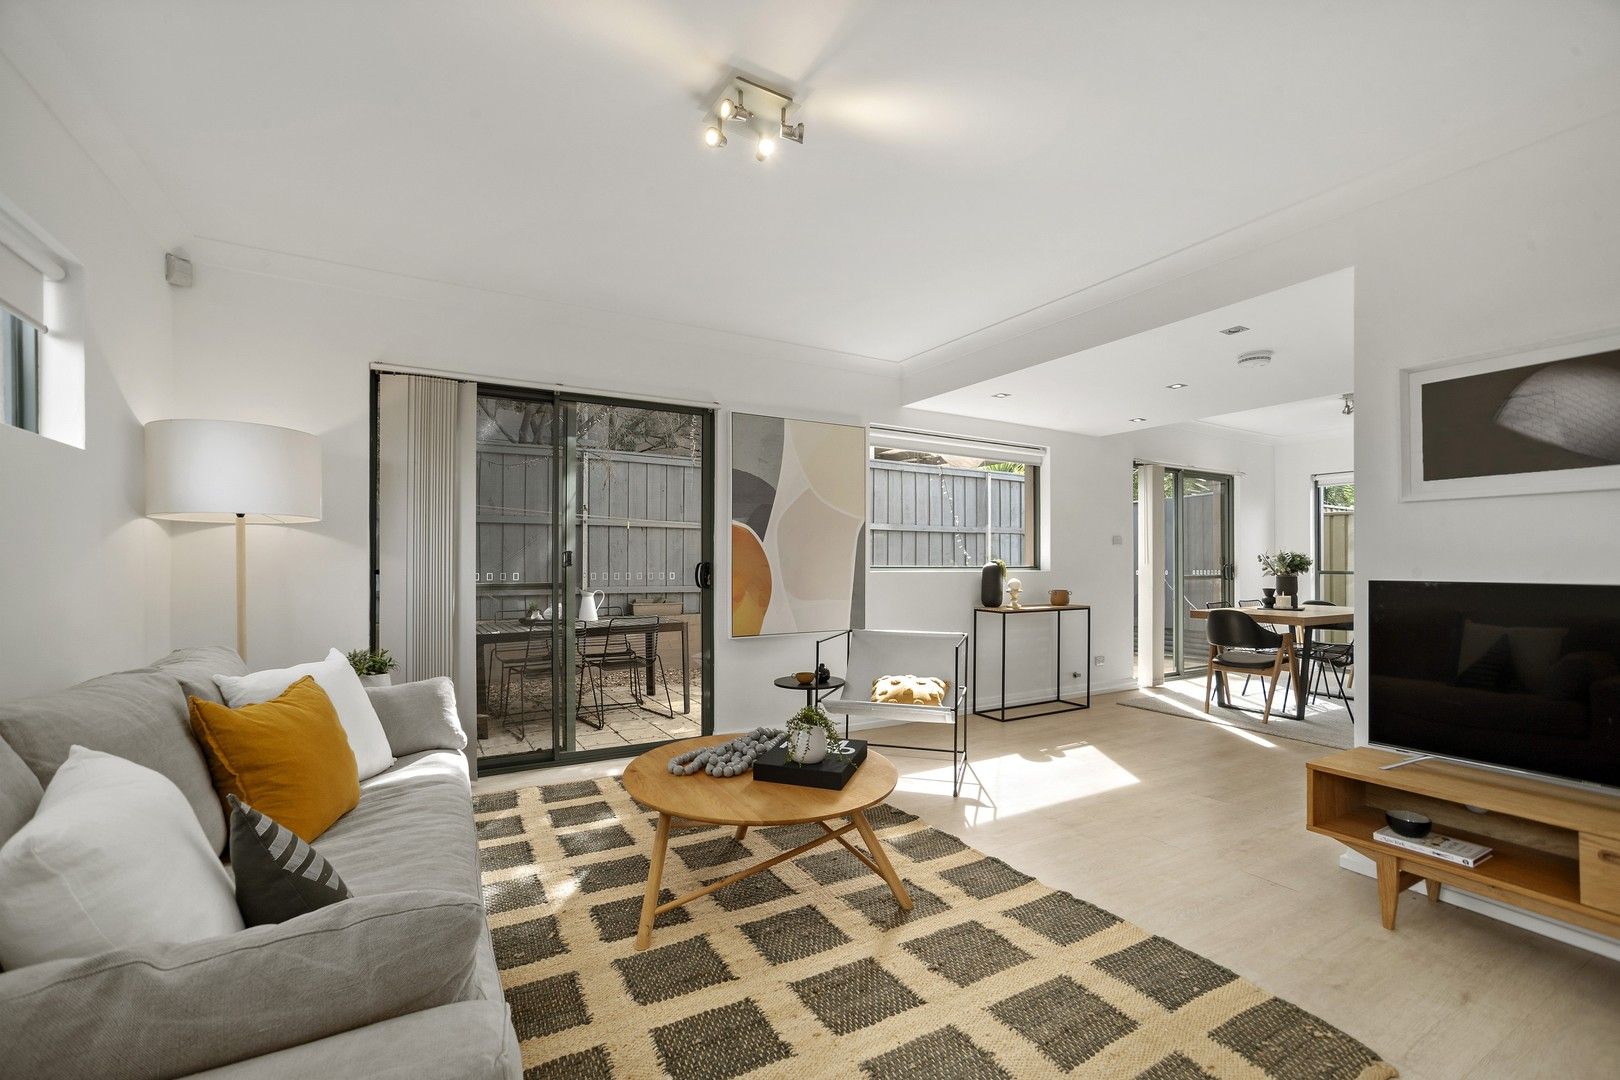 2 bedrooms House in 5/245 Balmain  Road LILYFIELD NSW, 2040